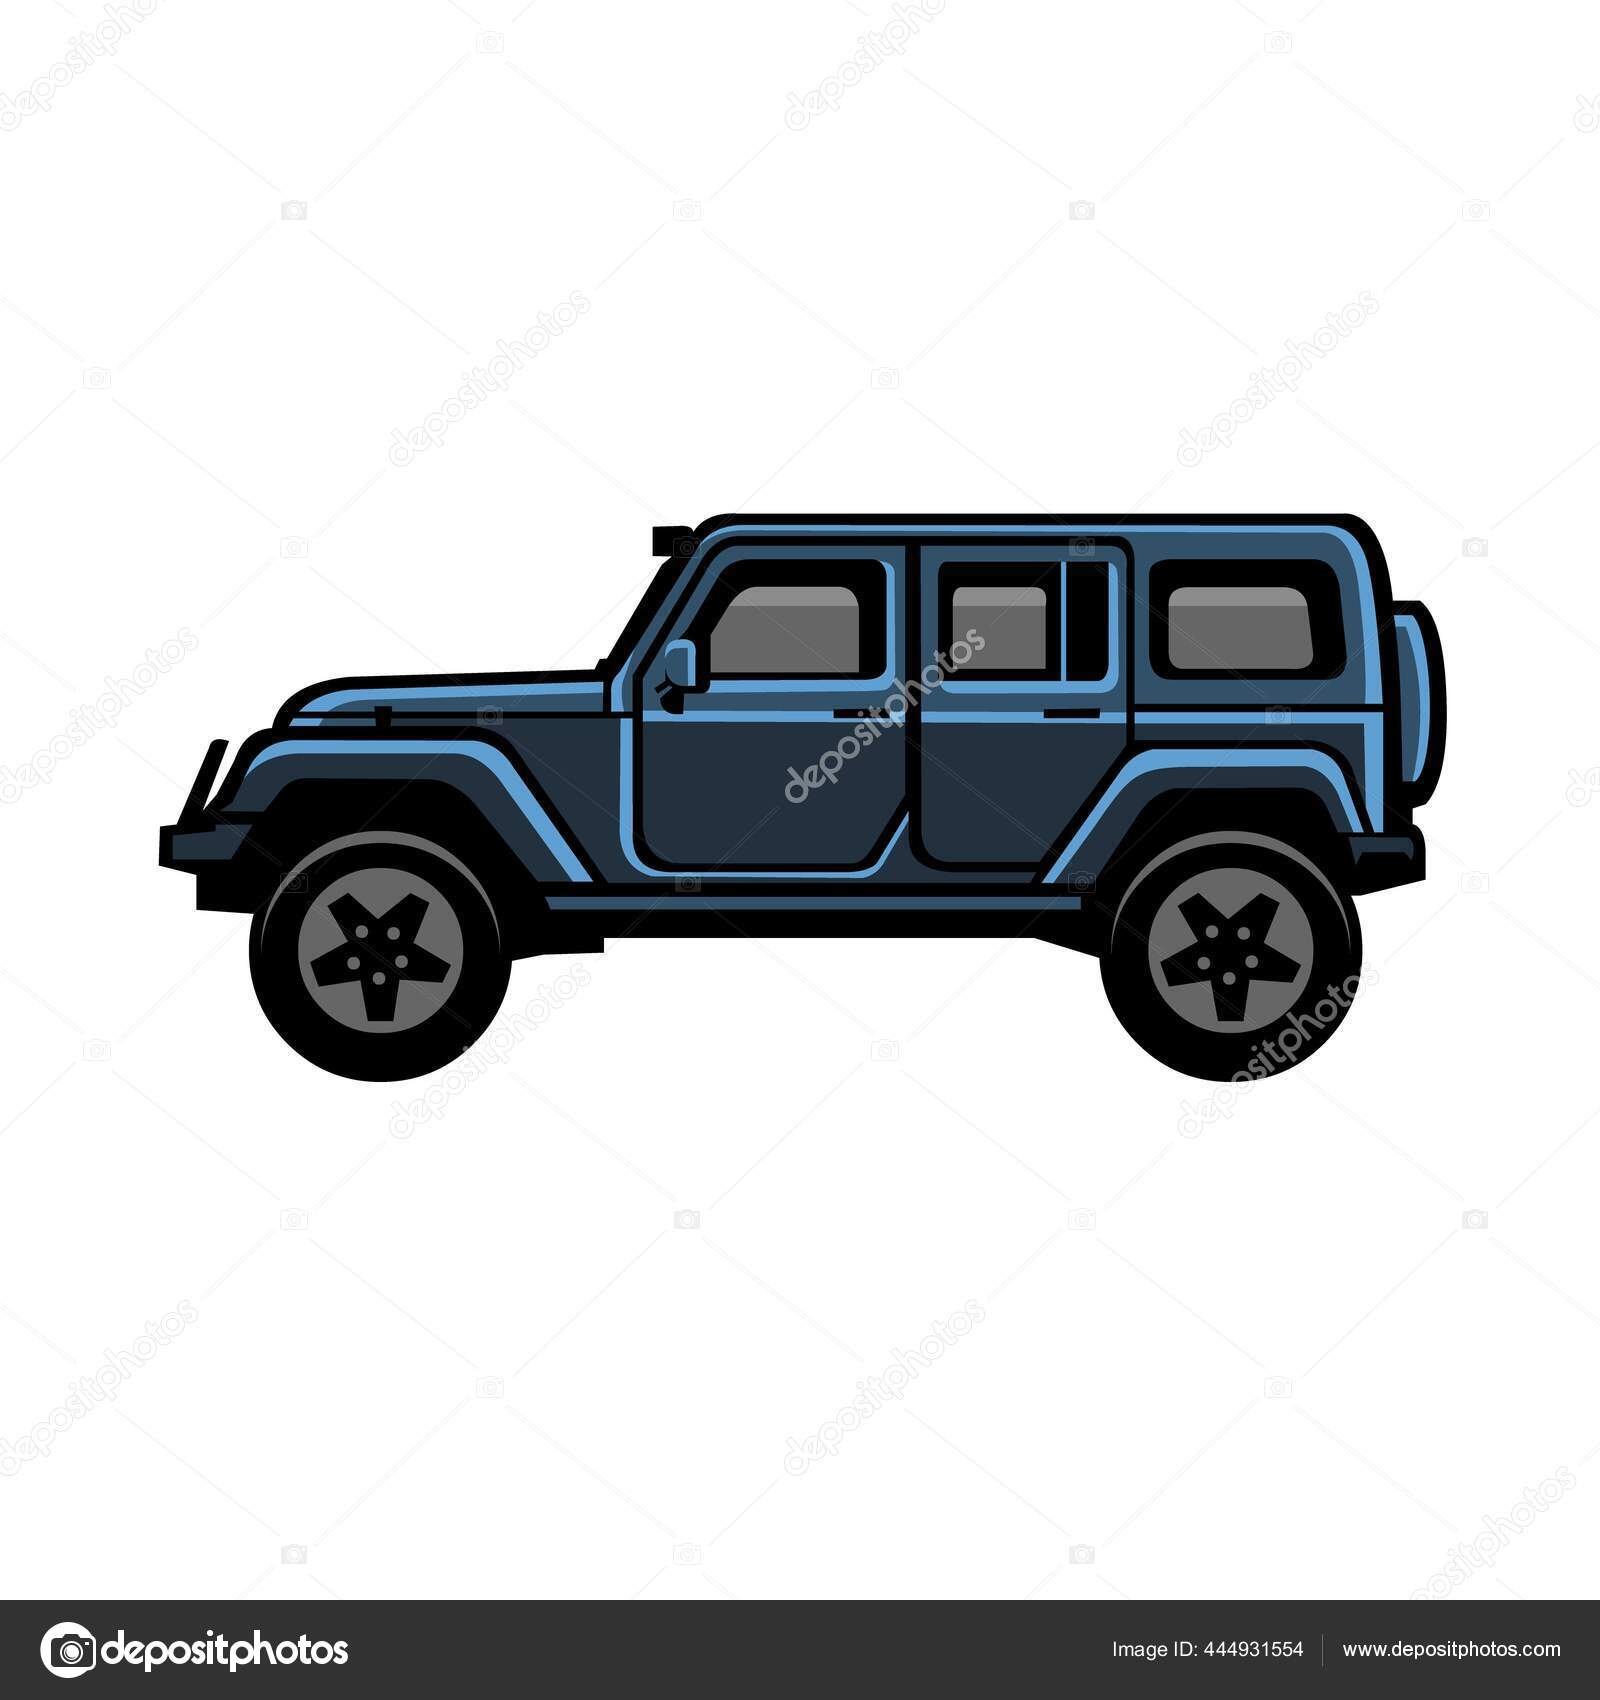 Jeep wrangler Vector Art Stock Images | Depositphotos